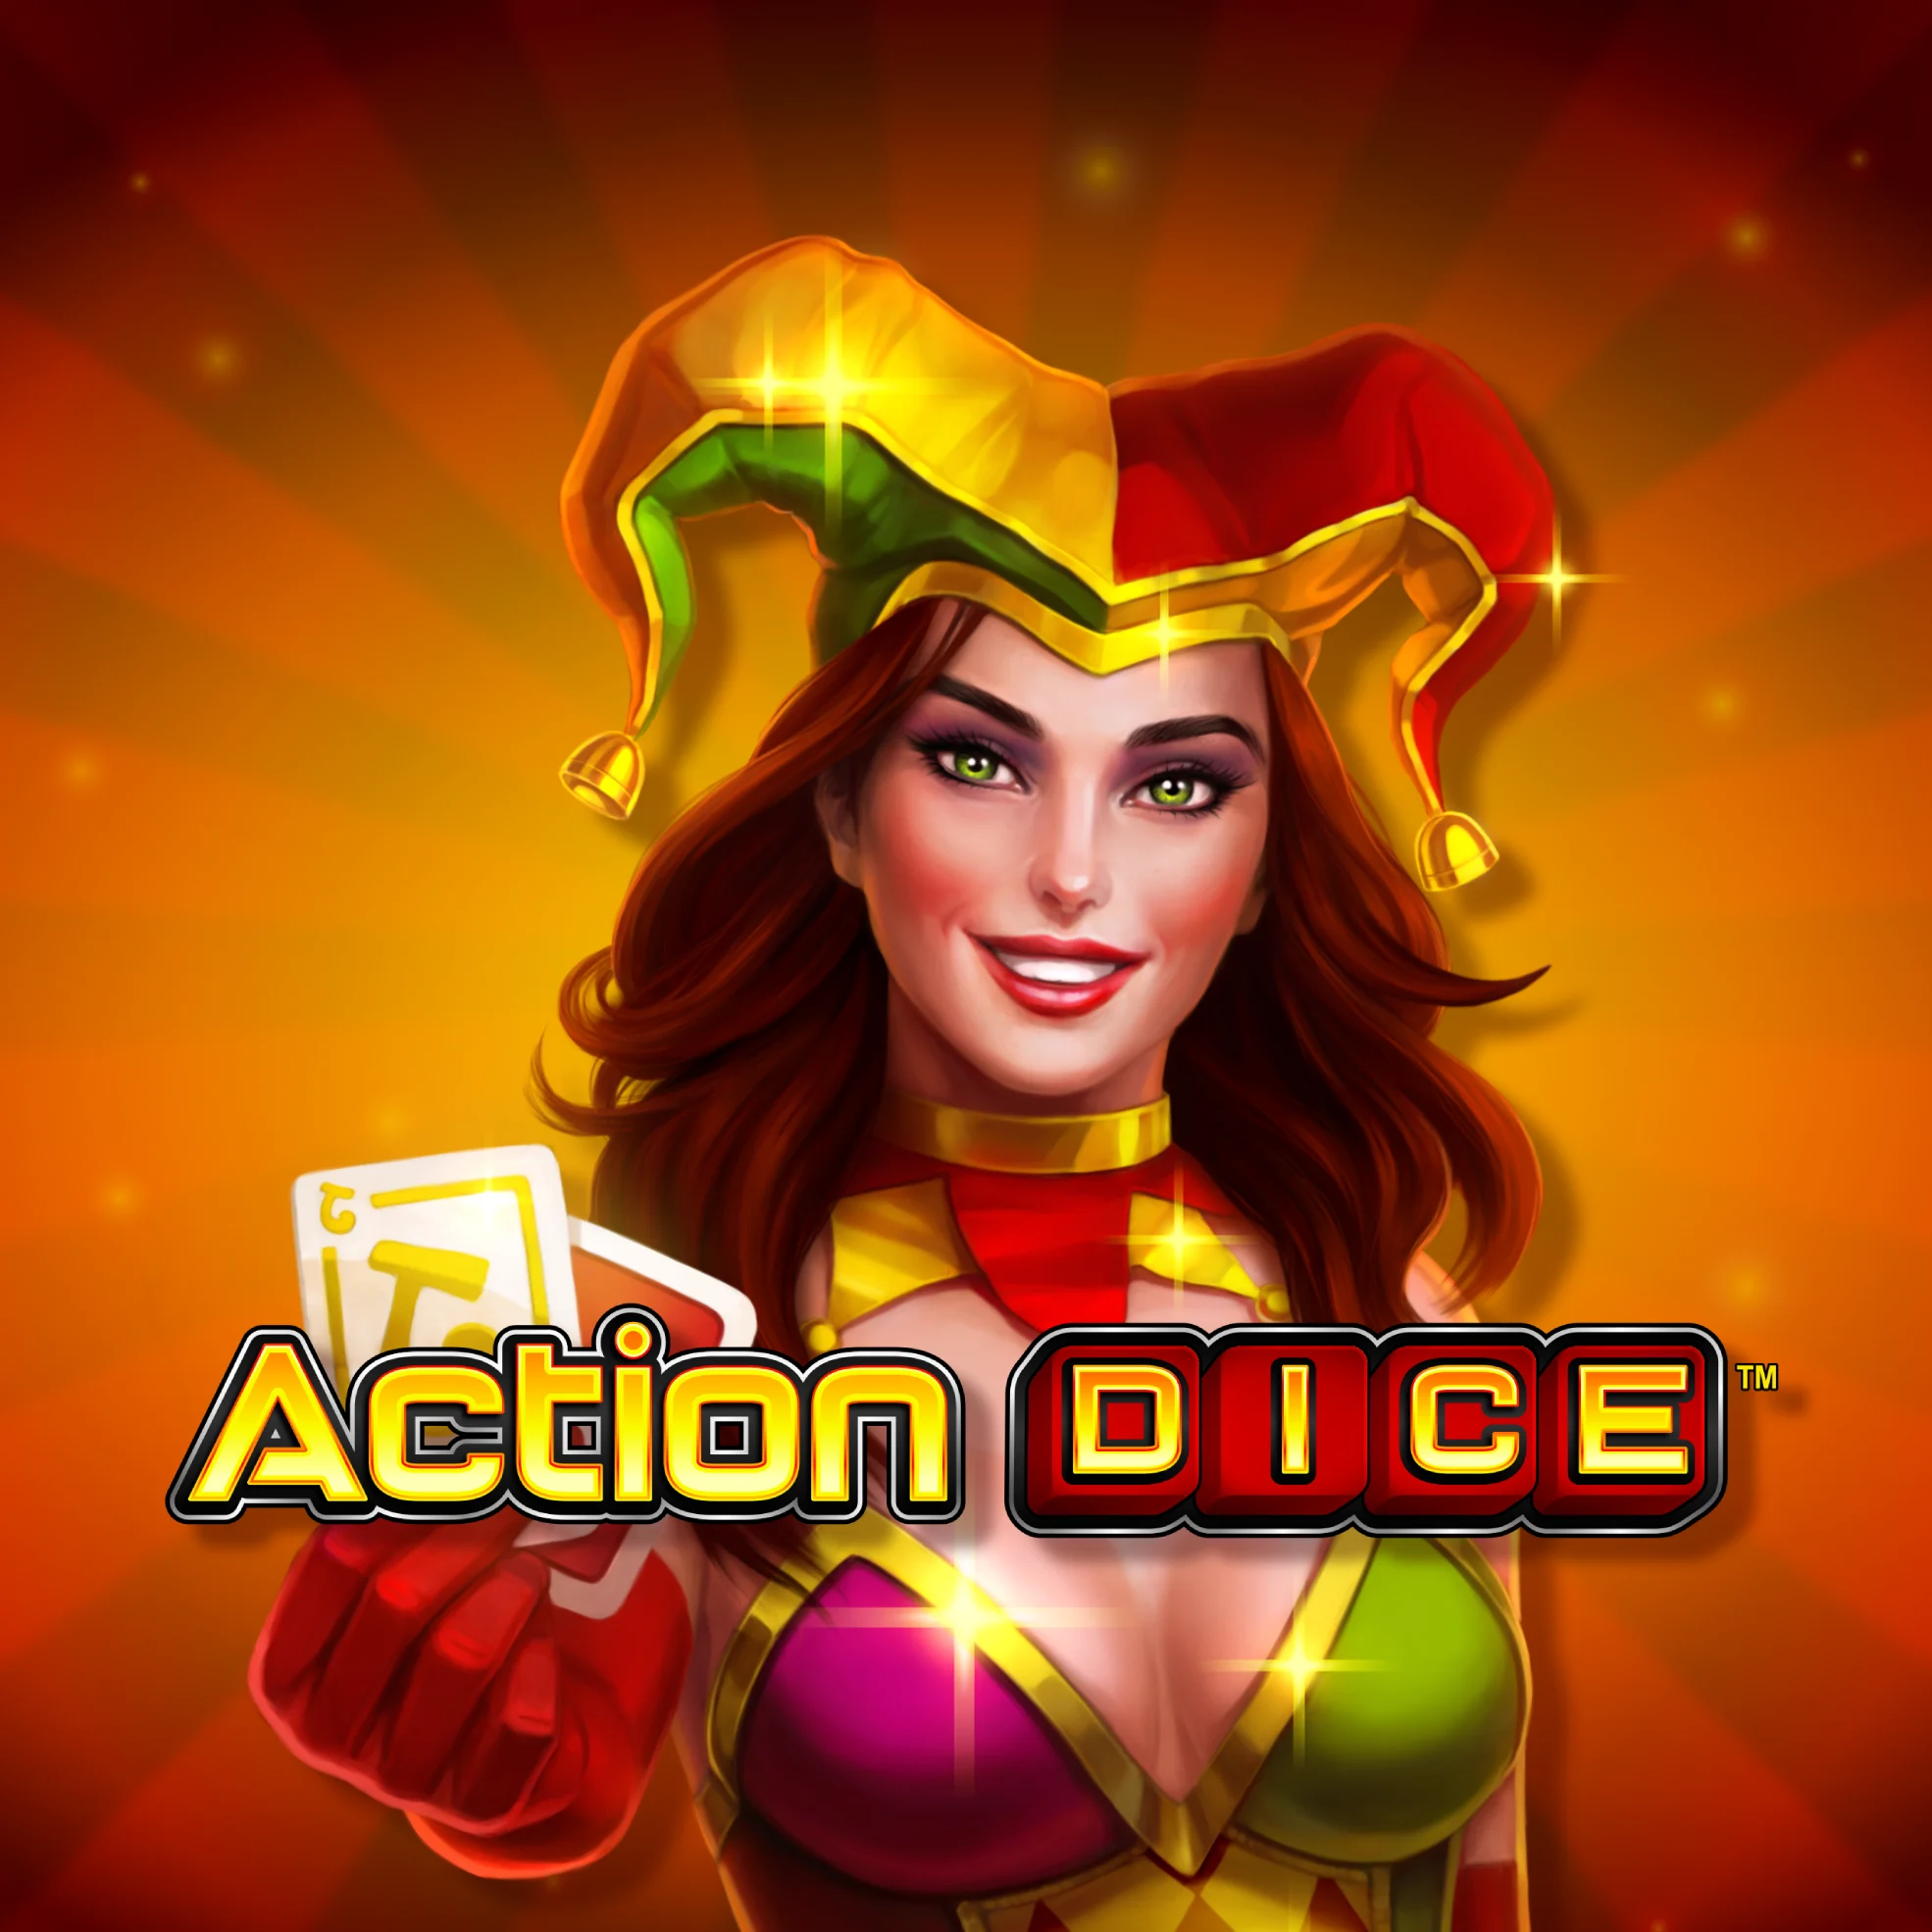 Play Action Dice on Starcasinodice.be online casino